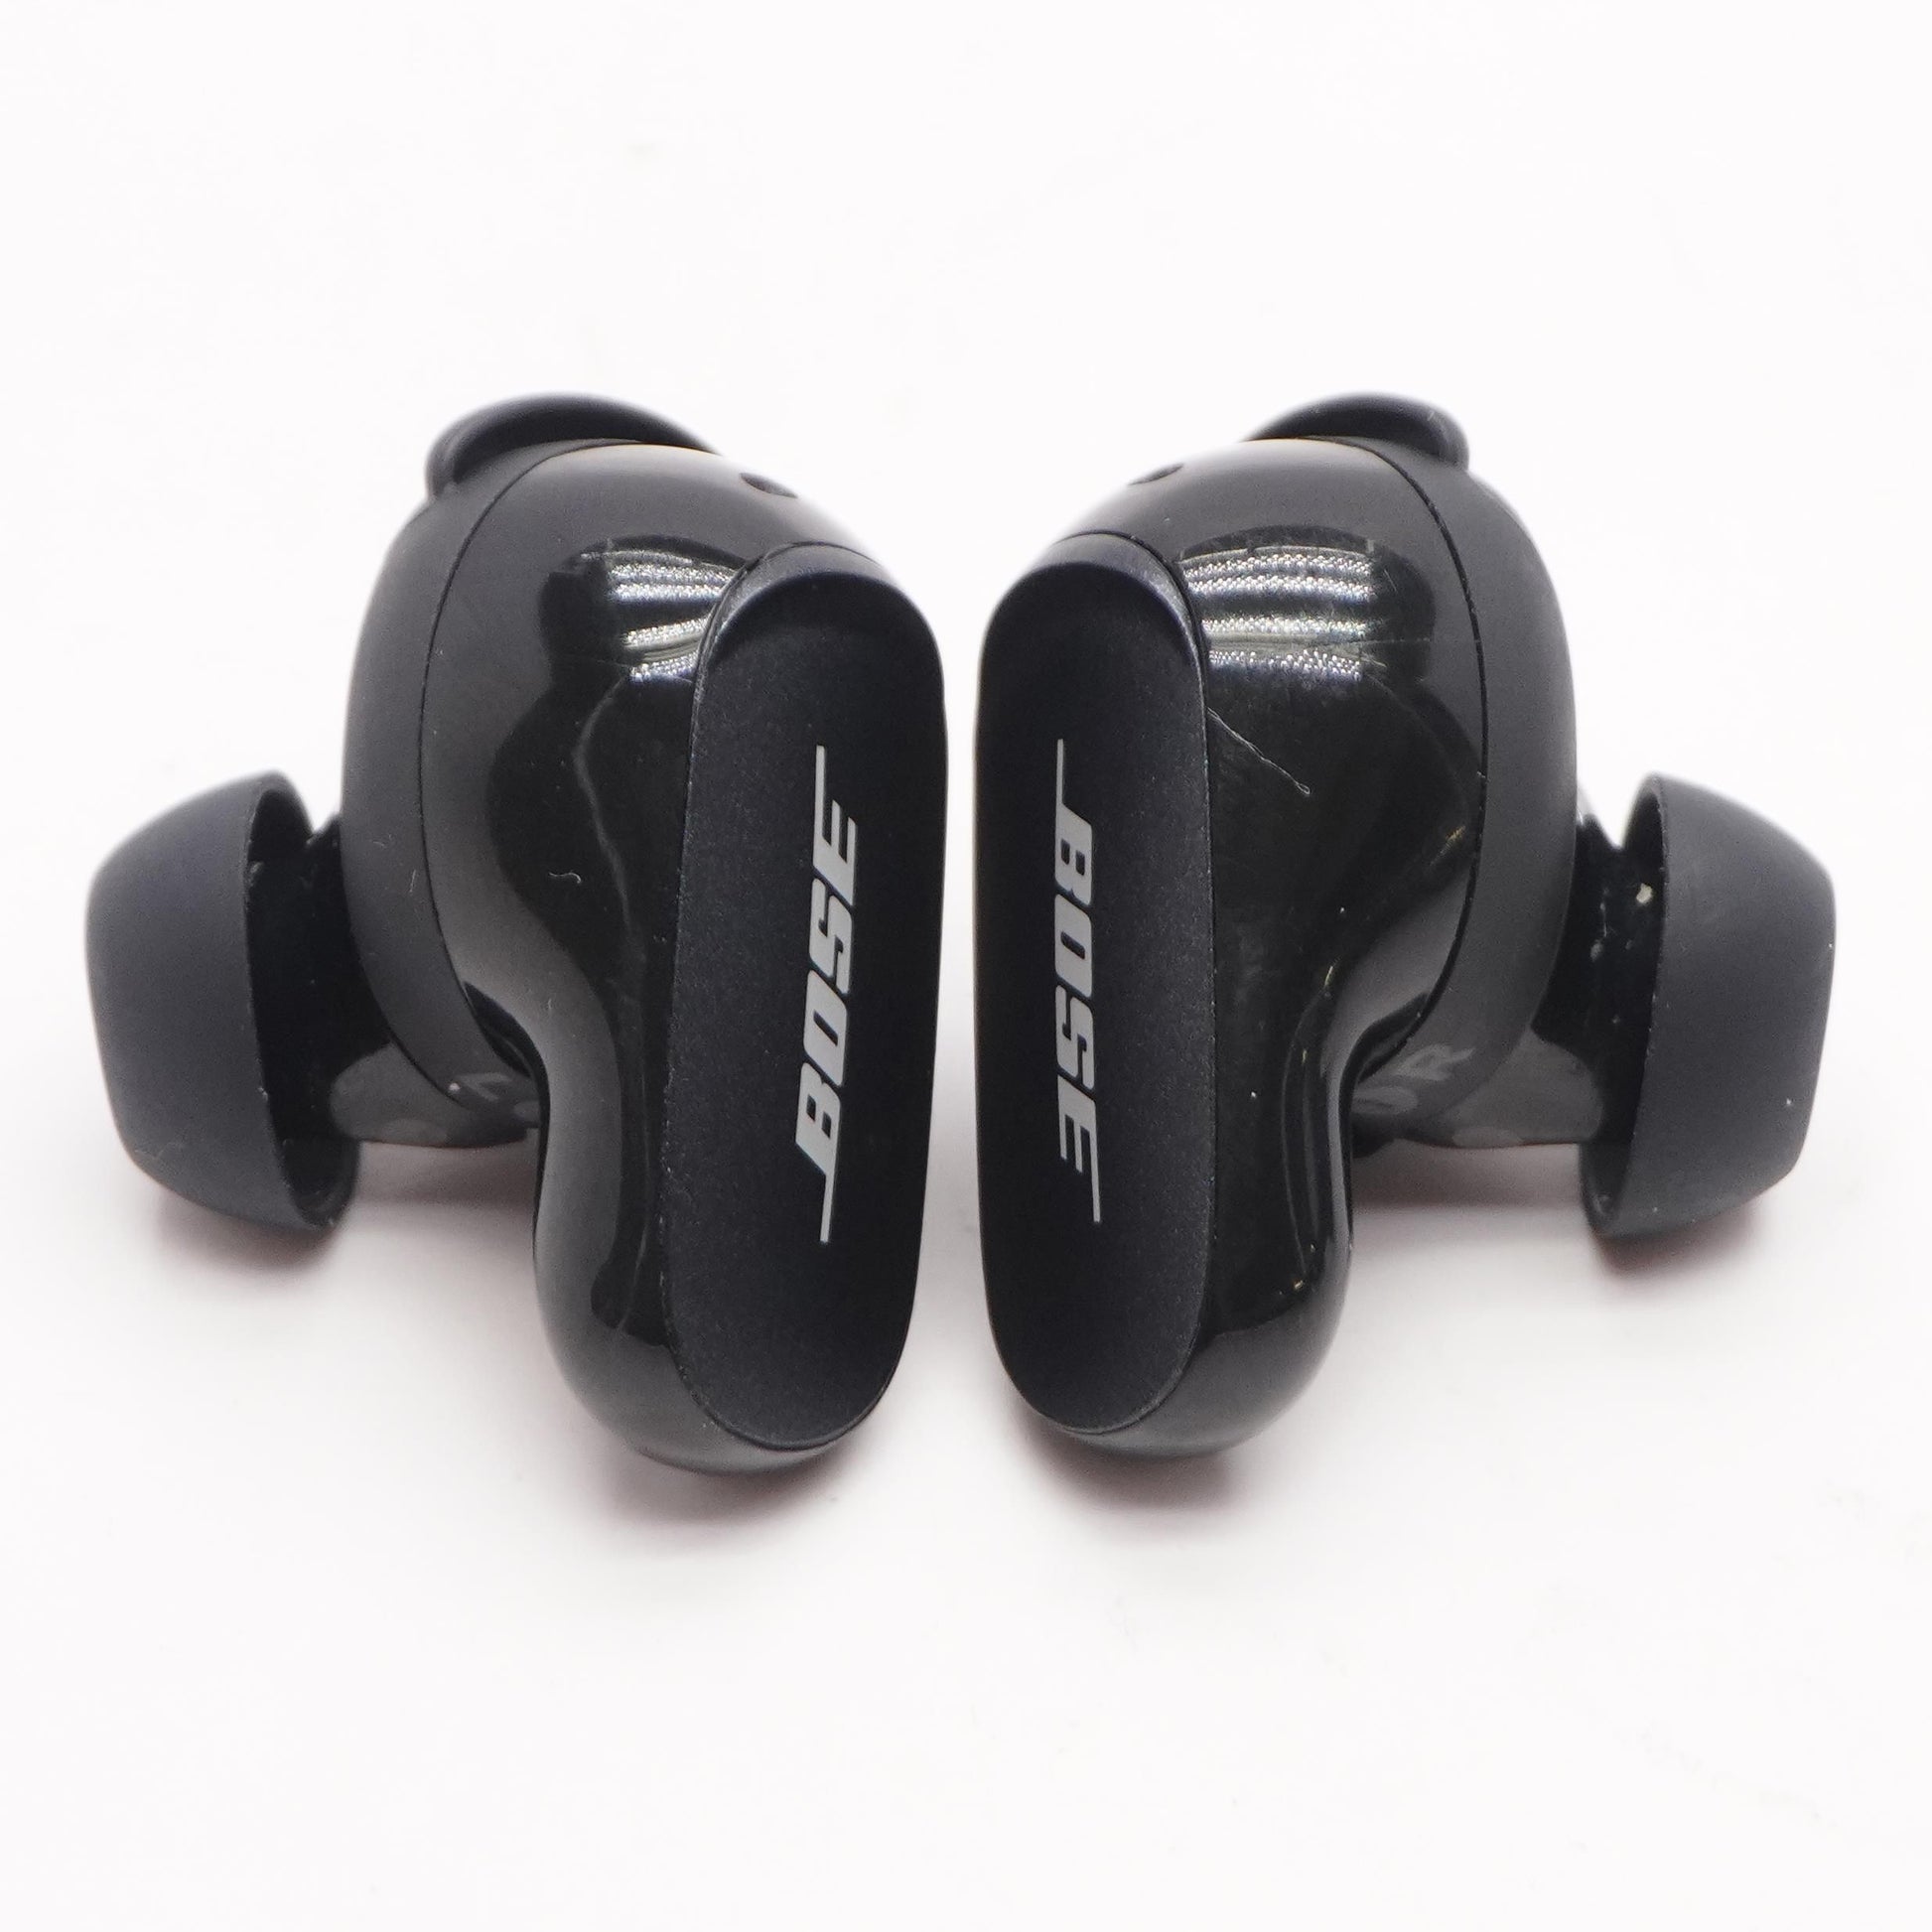 Black QuietComfort 45 Noise Cancelling Headphones – Unclaimed Baggage